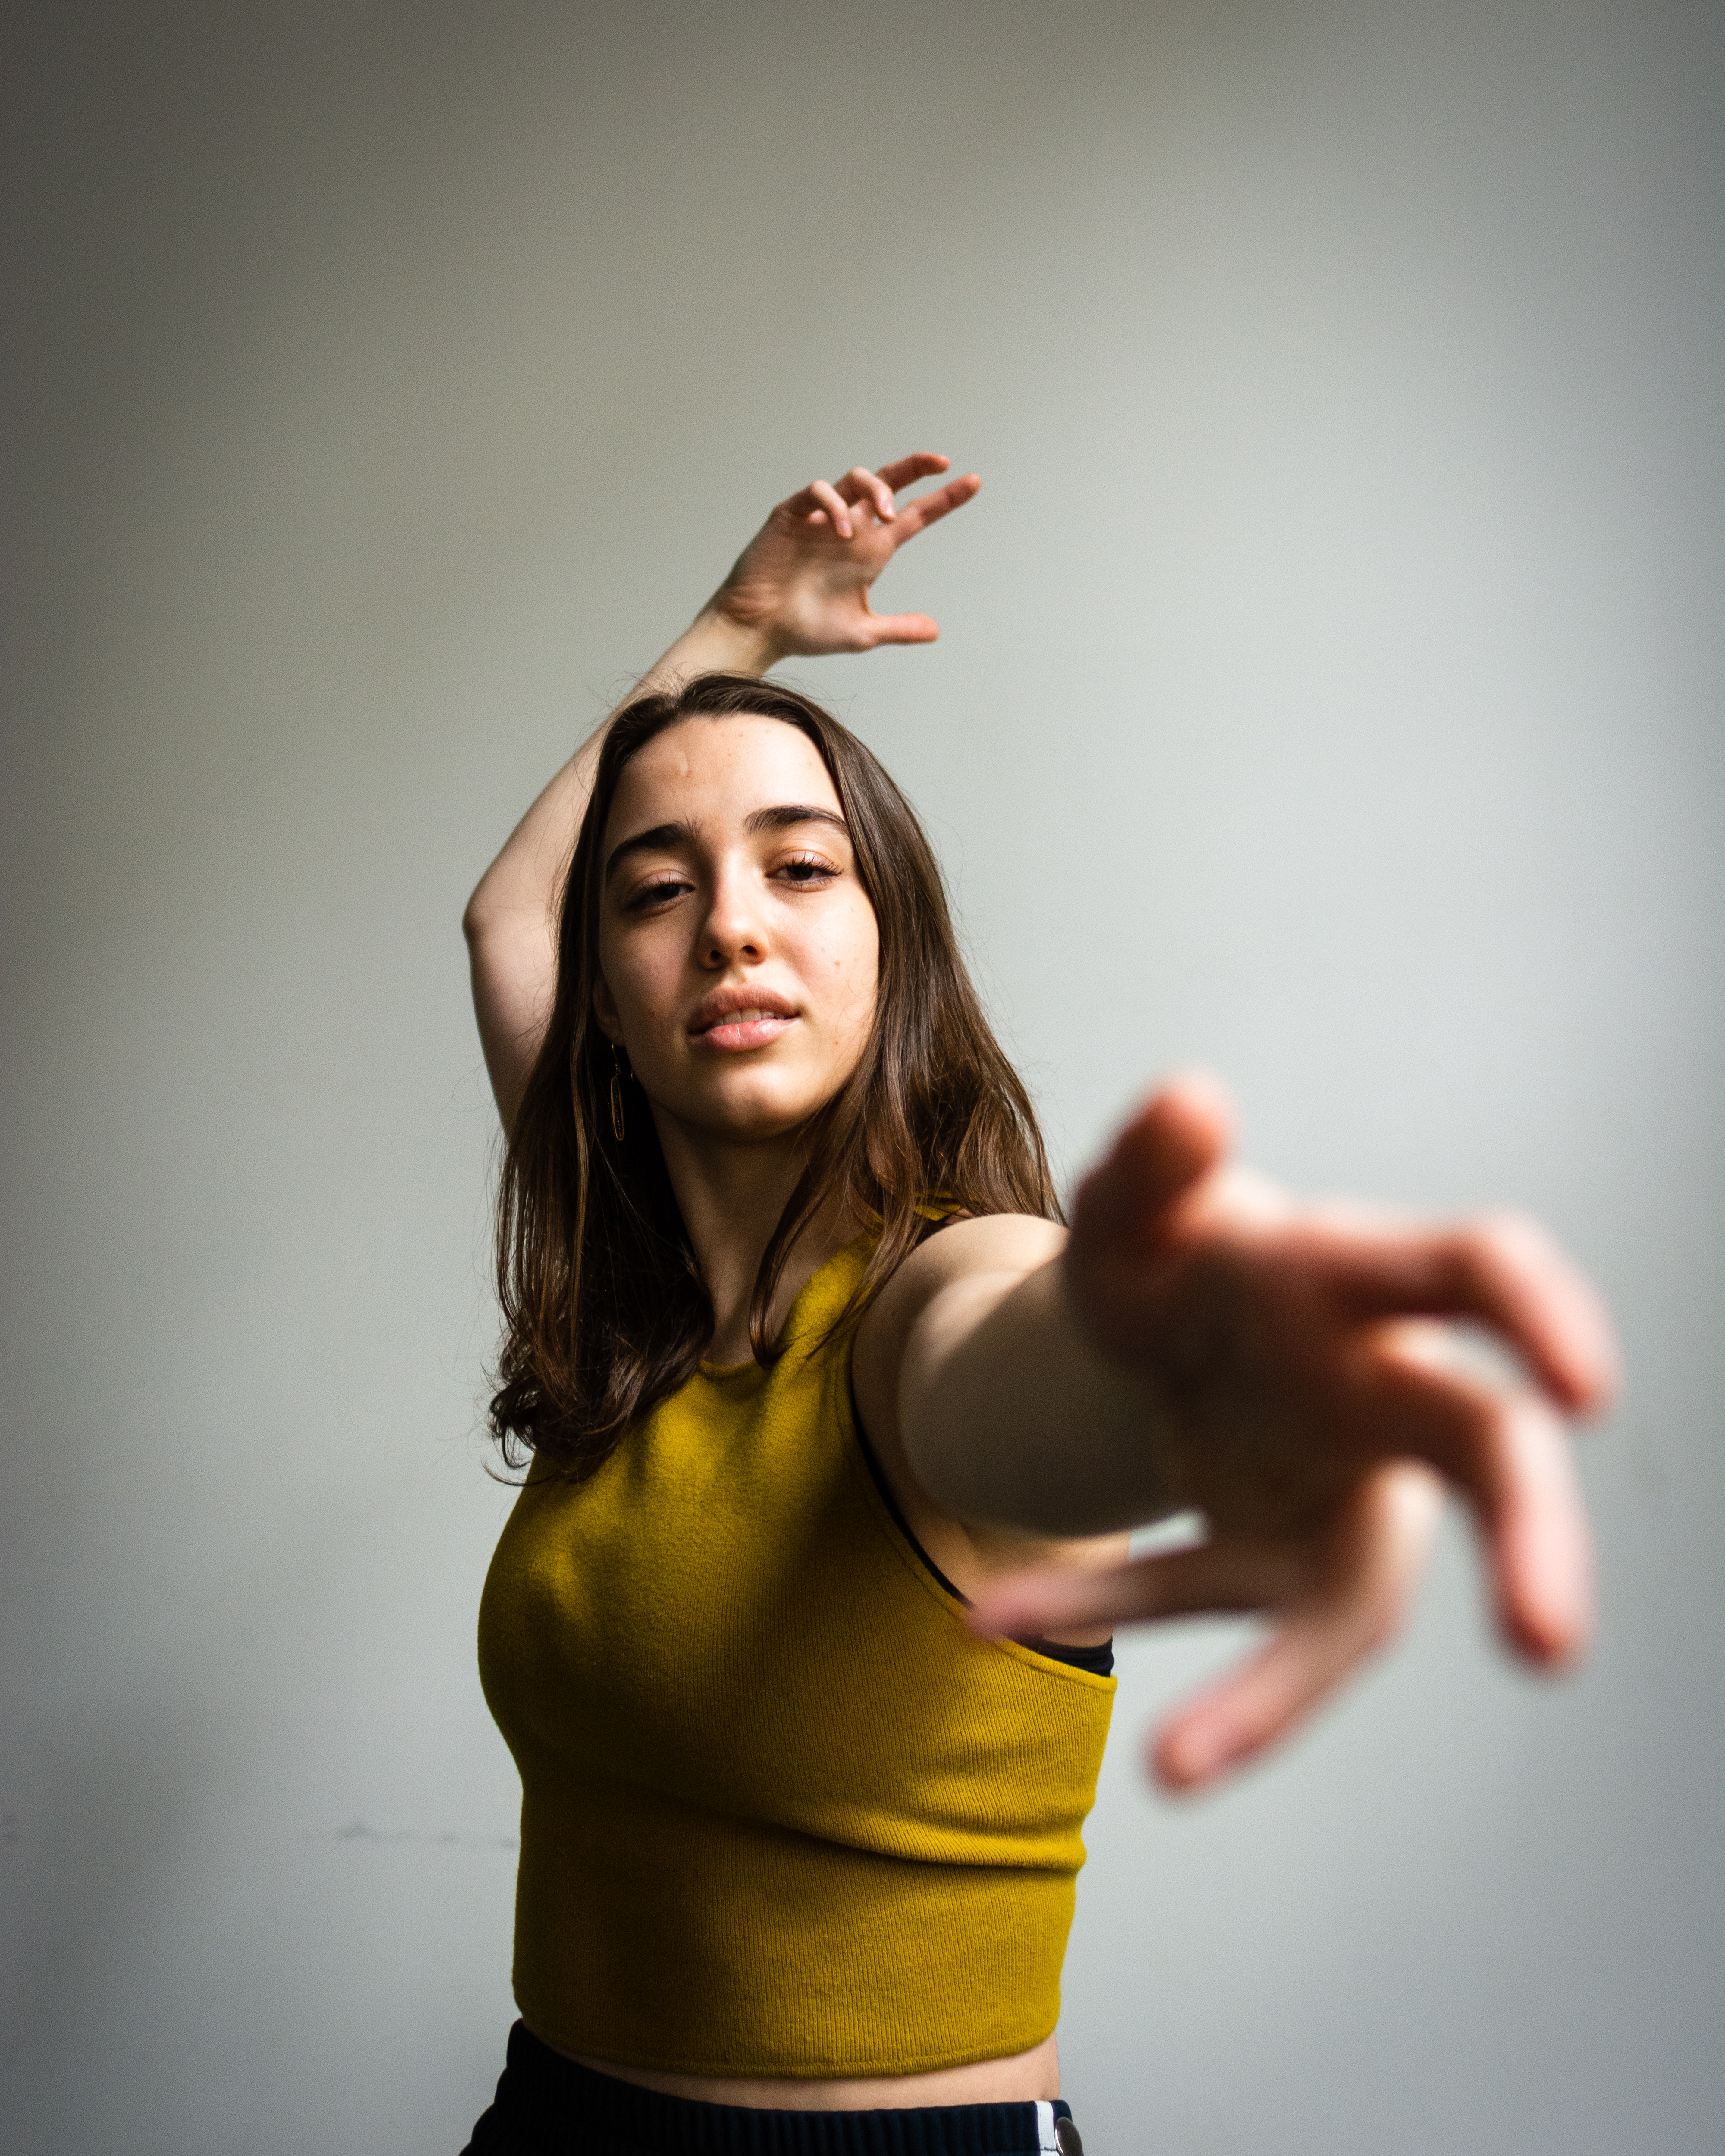 Allison Costa, dancing, reaching towards the camera